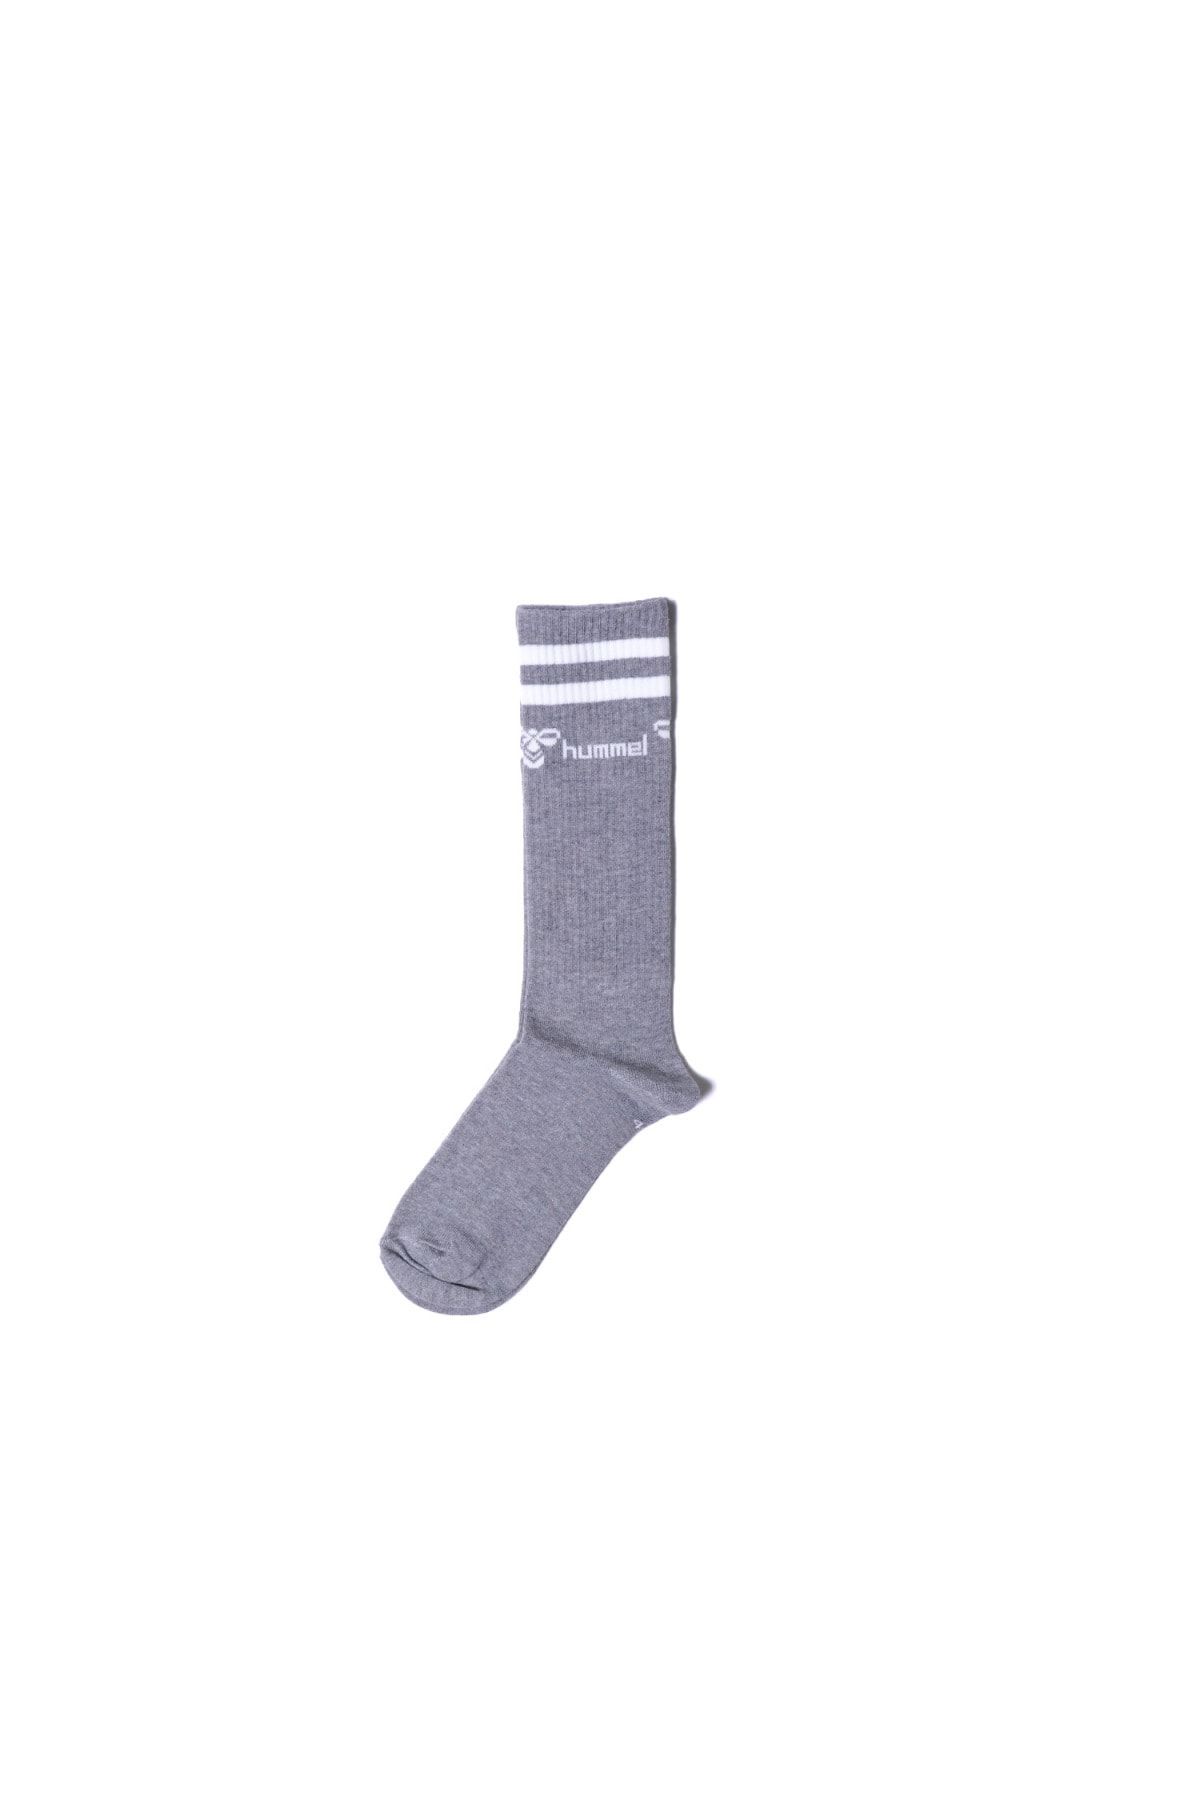 hummel 970234-2006 Hmlshaco Long Socks Unisex Çorap Grey Melange